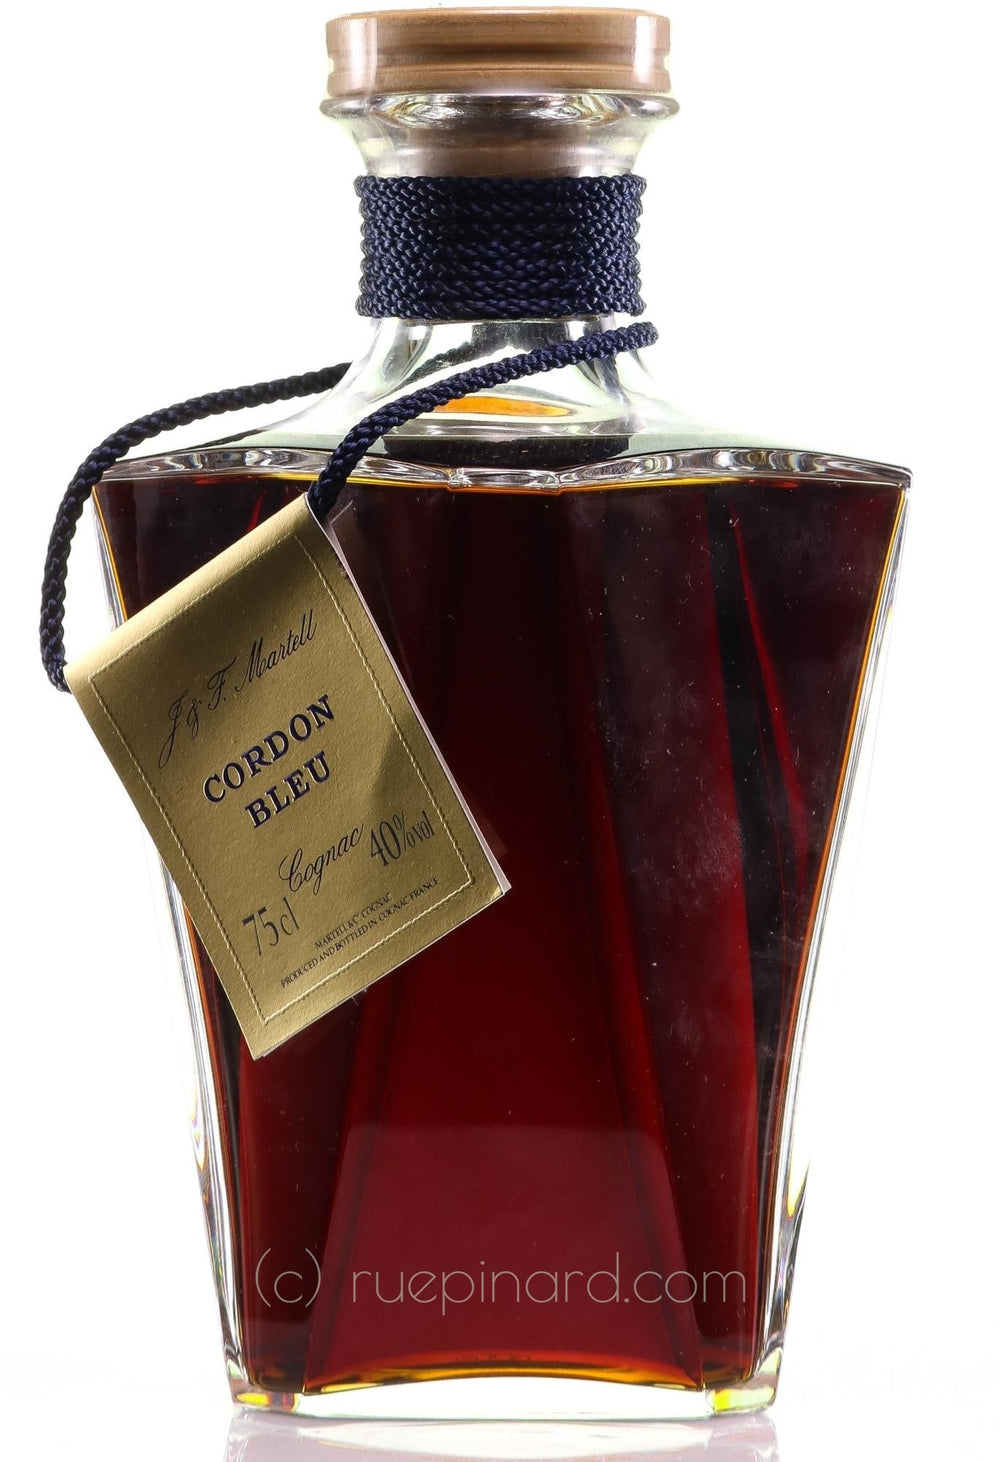 1980 Martell Cordon Bleu Cognac Decanter with Extra Stopper - Rue Pinard